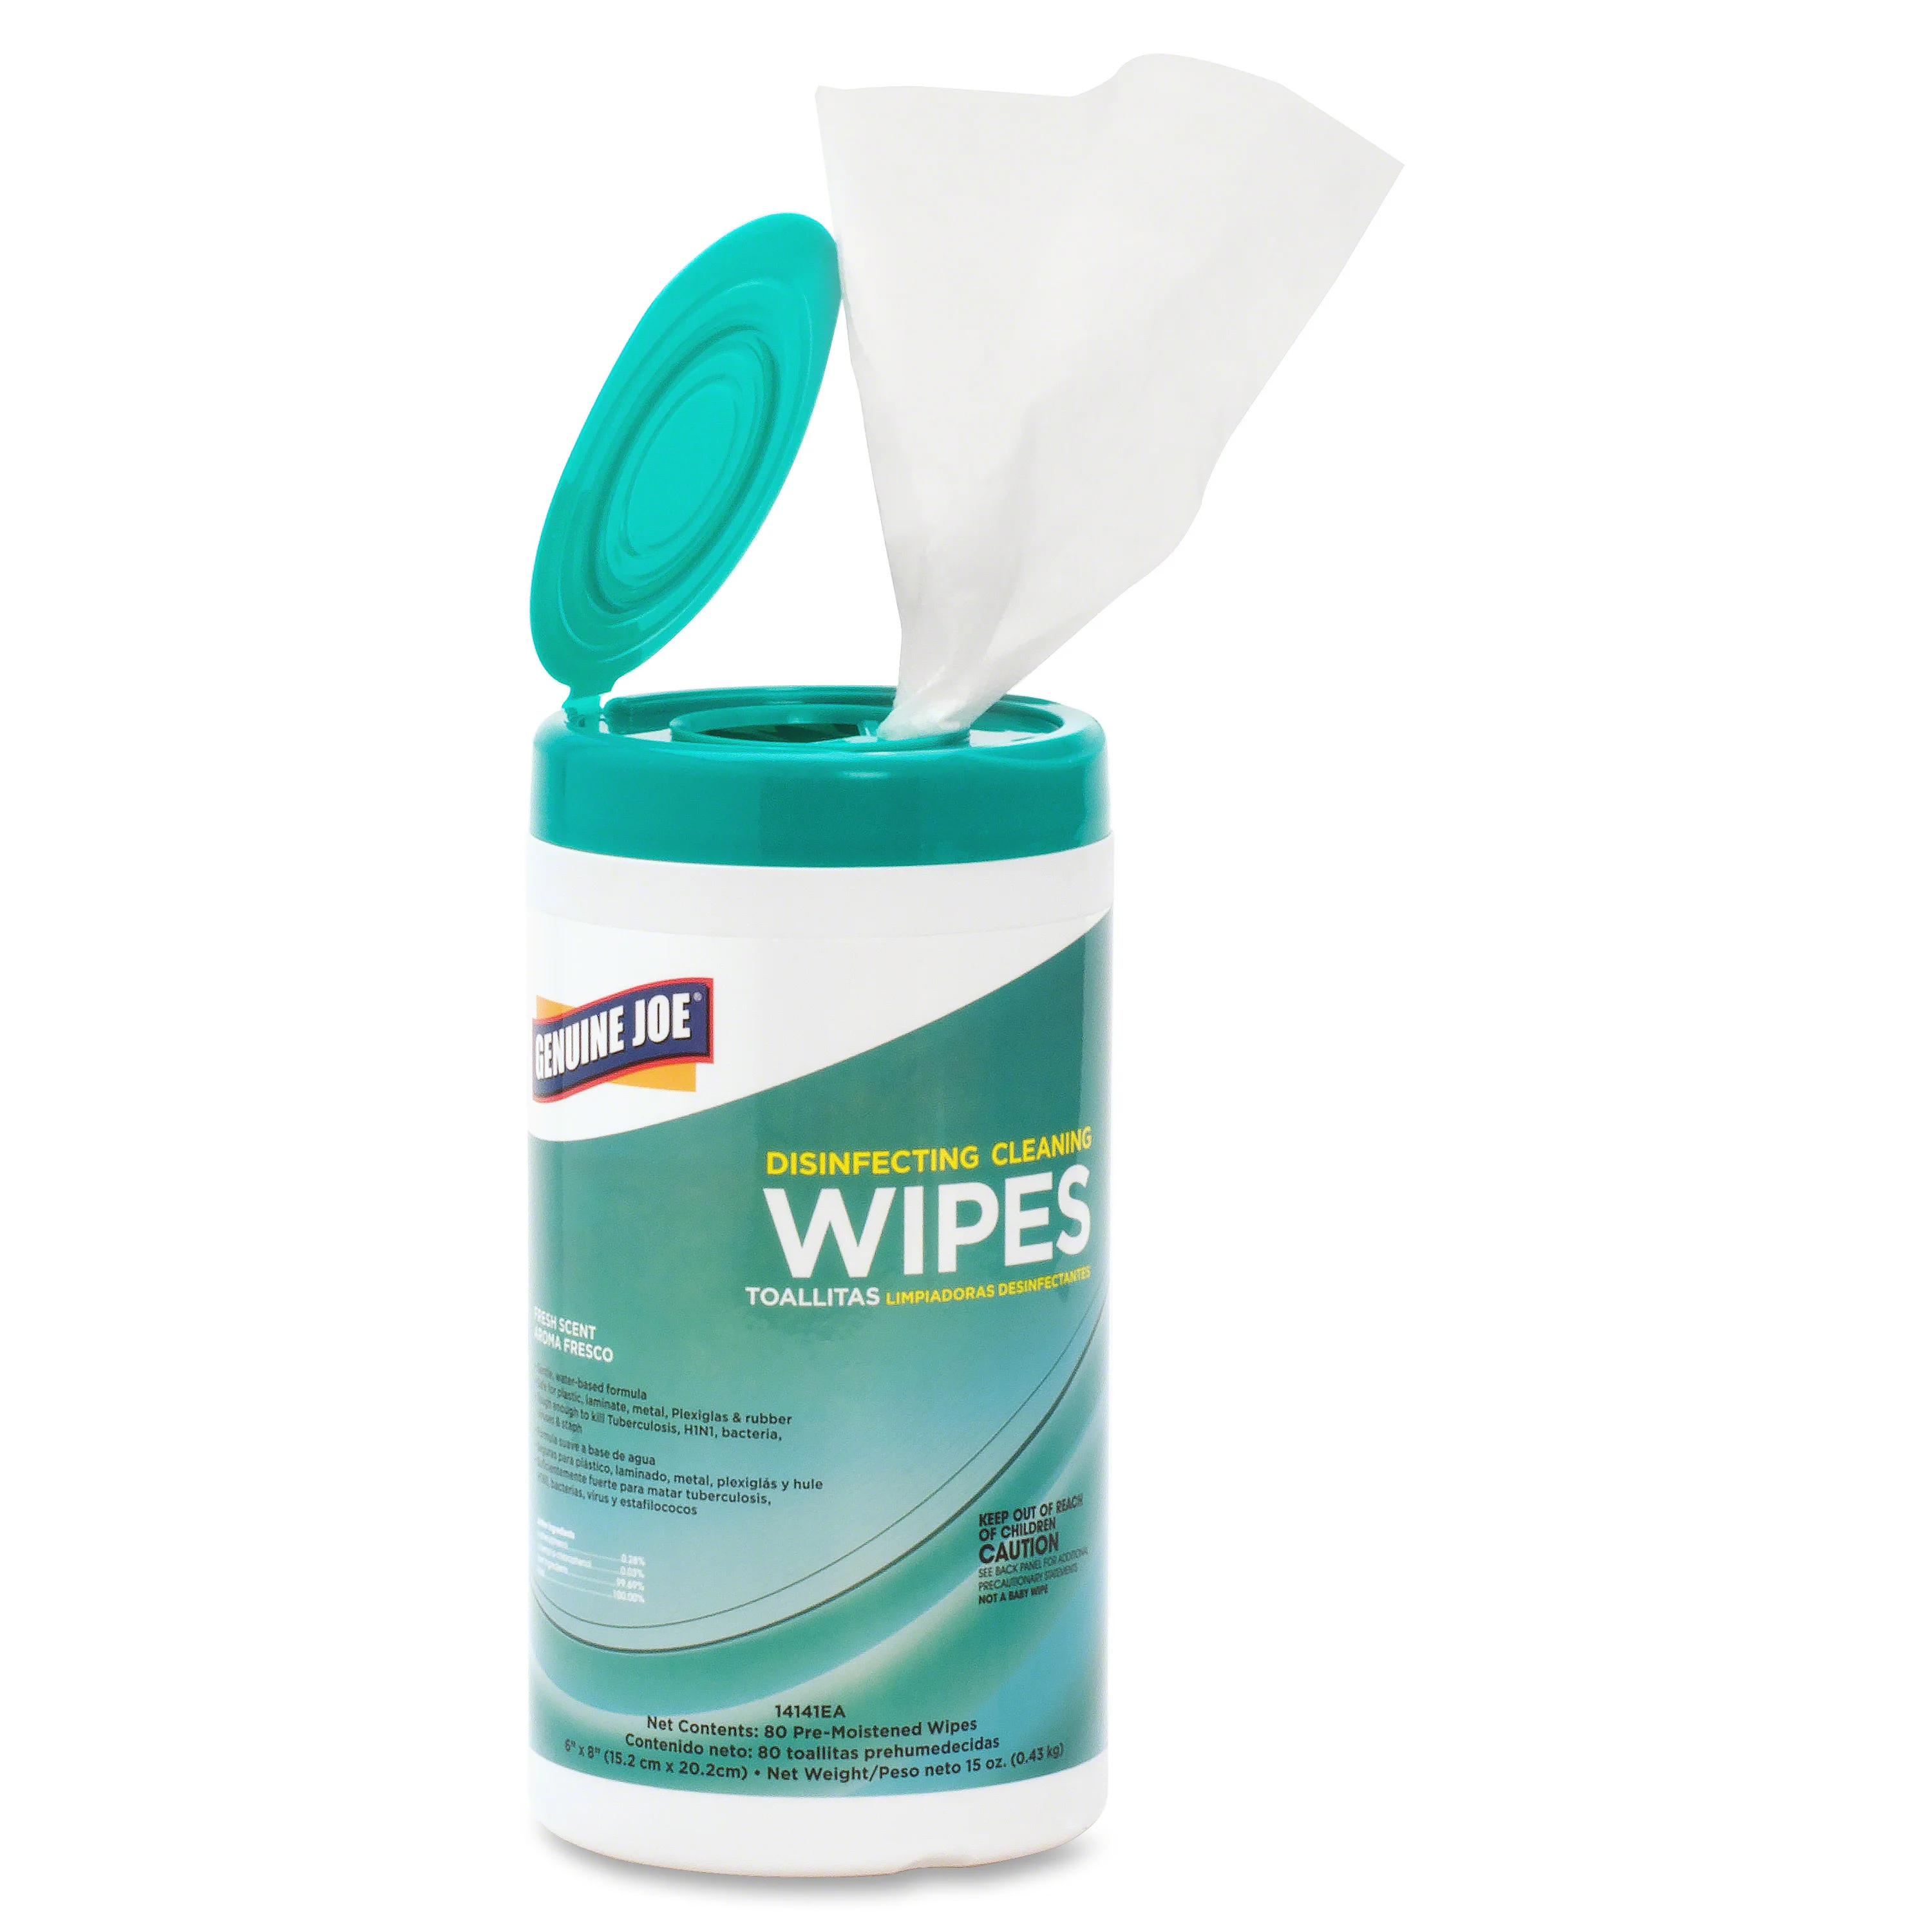 Cleaning wipes салфетки Nanomax. Cleaning wipes салфетки. Sika Cleaning wipes-100 (50 шт). Вайпс.